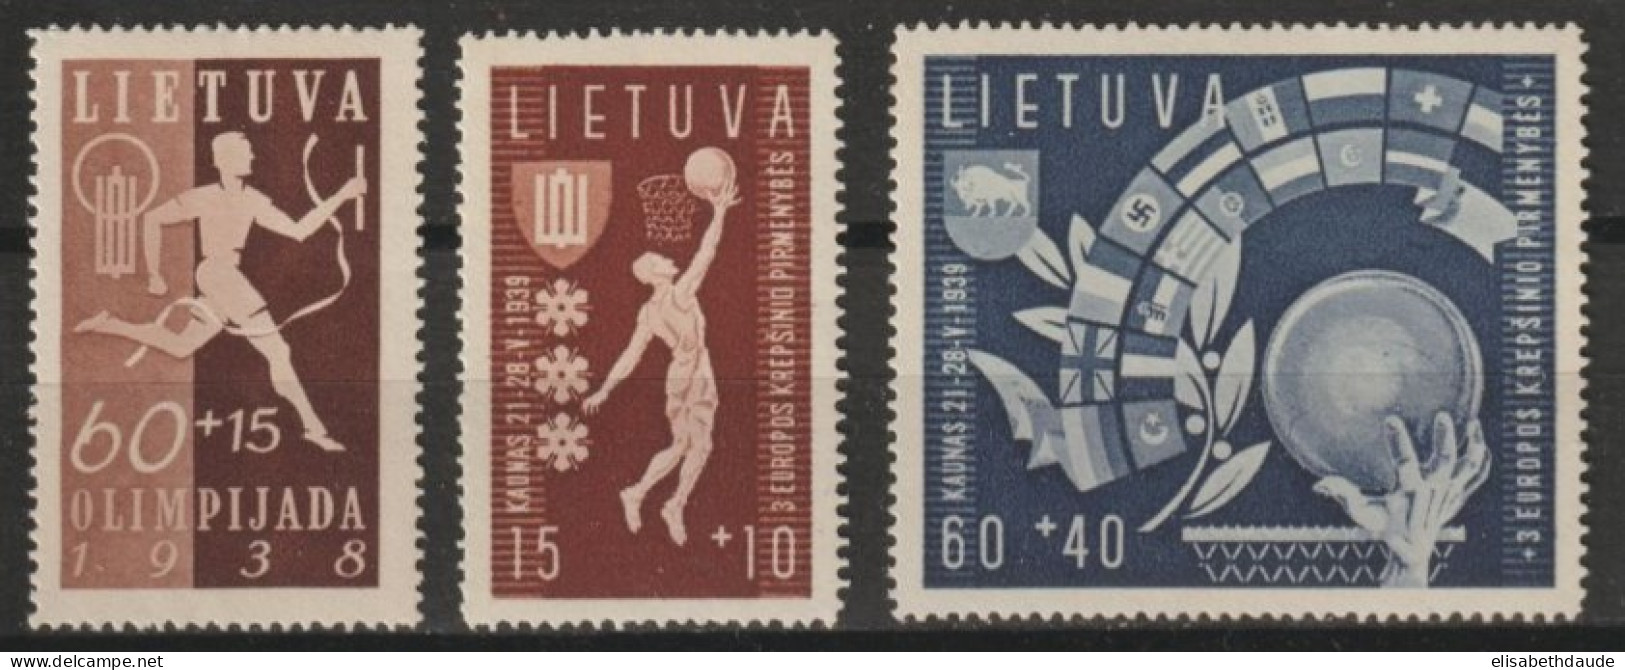 1939 - LITUANIE - SERIE COMPLETE BASKET N° 370/372  * MLH - COTE = 32.5 EUR. - Lithuania